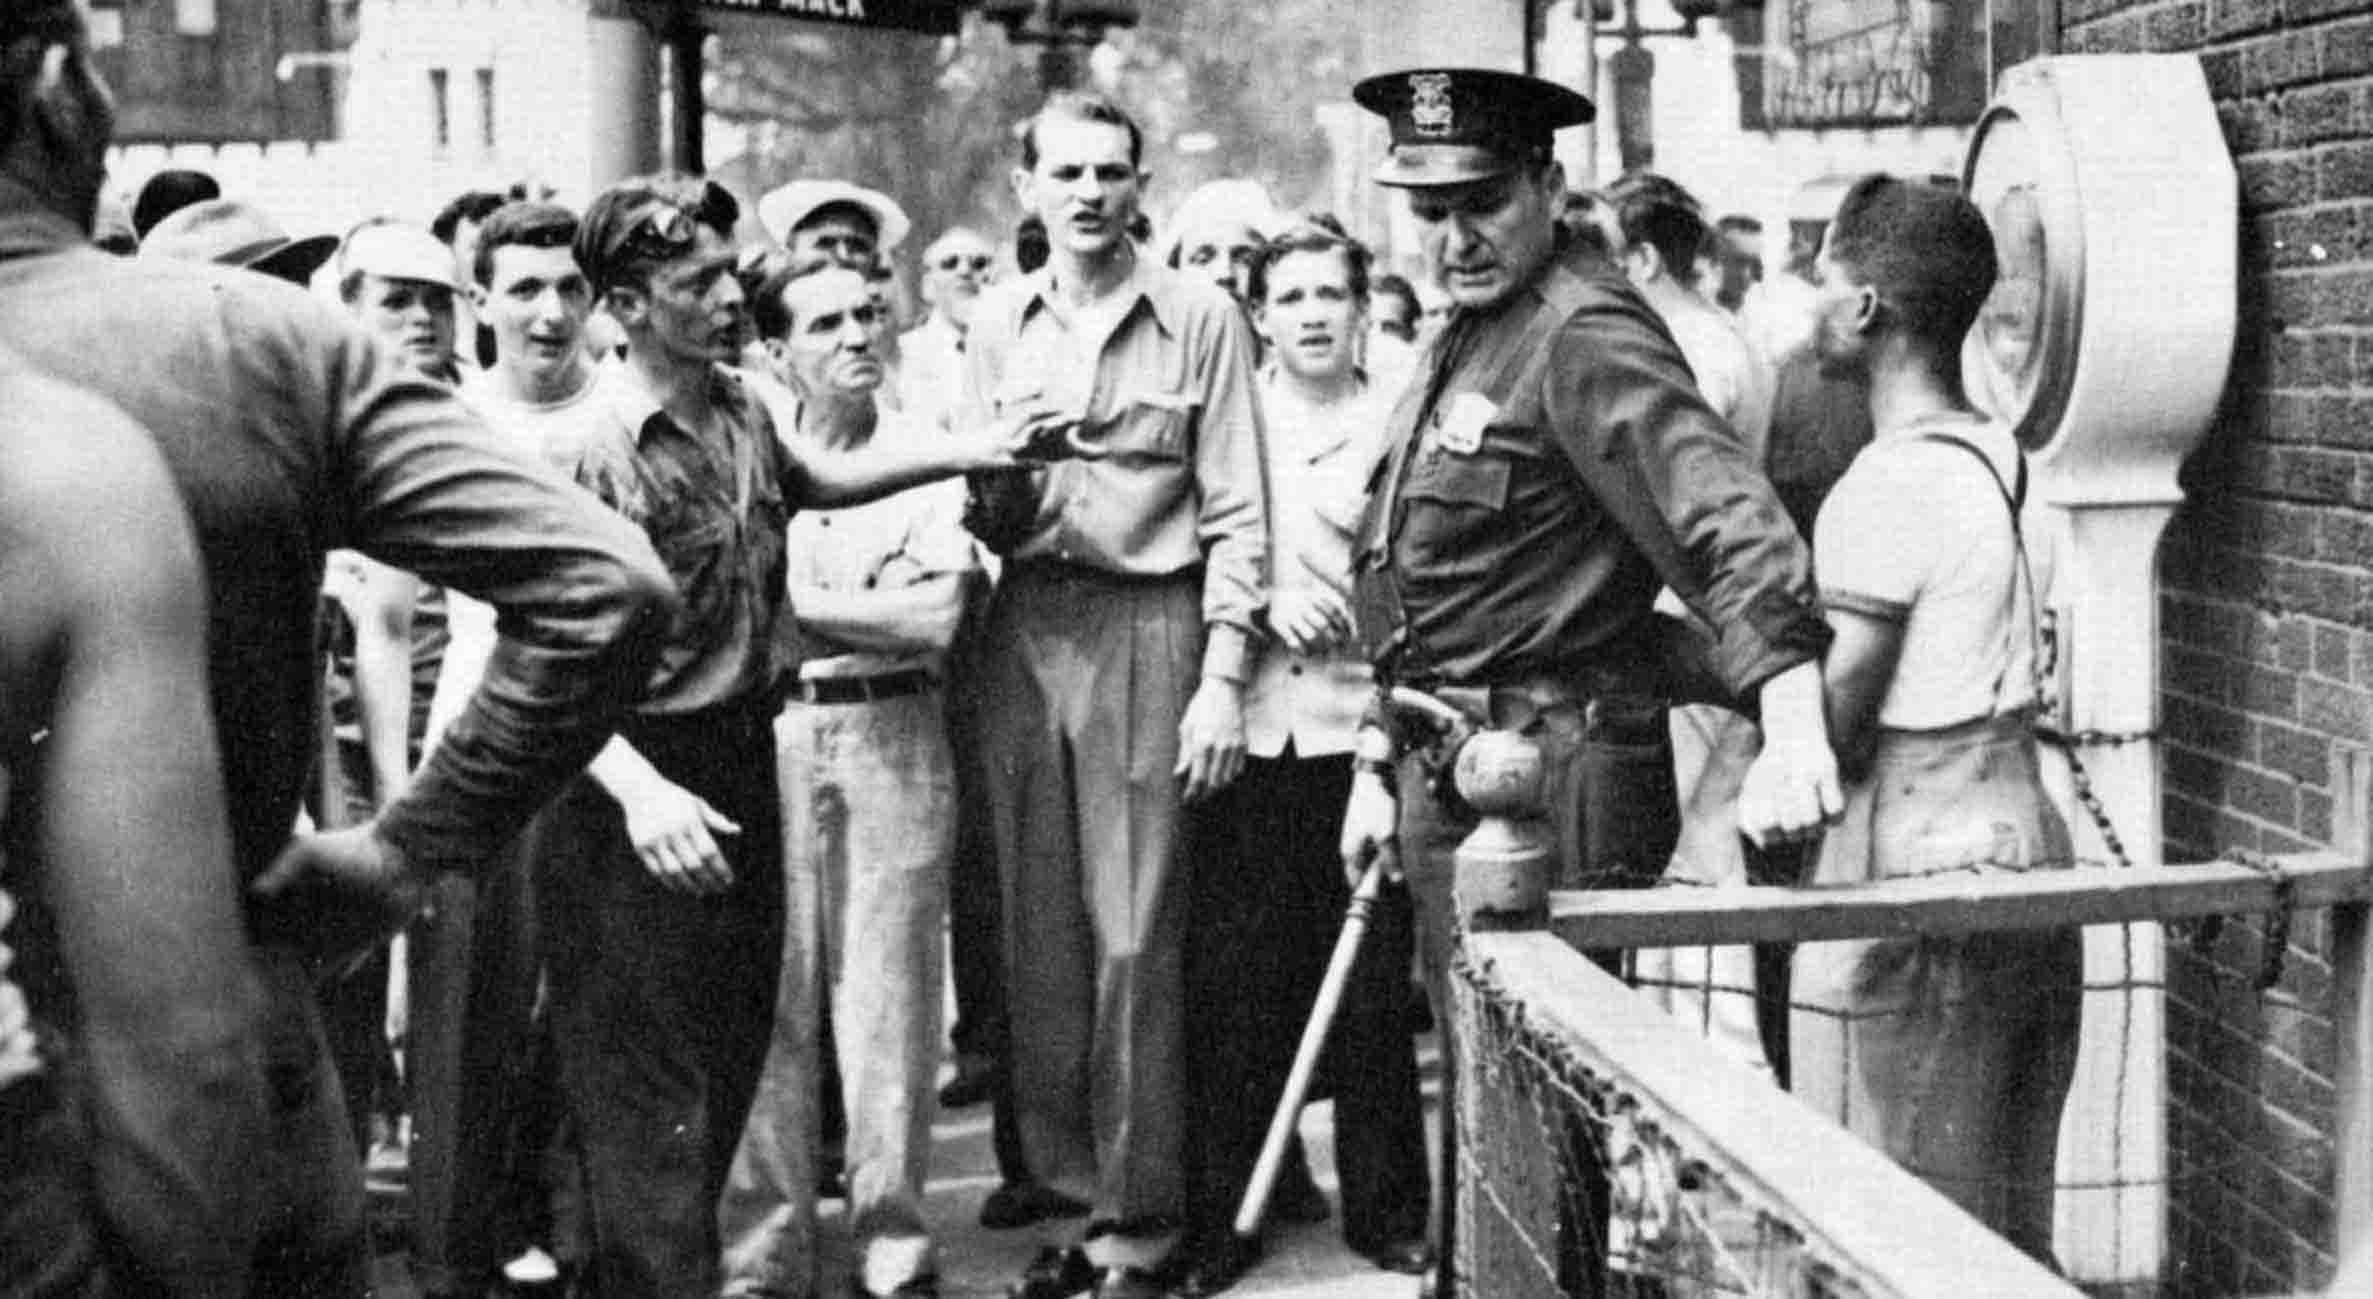 Detroit riot 1943; Police